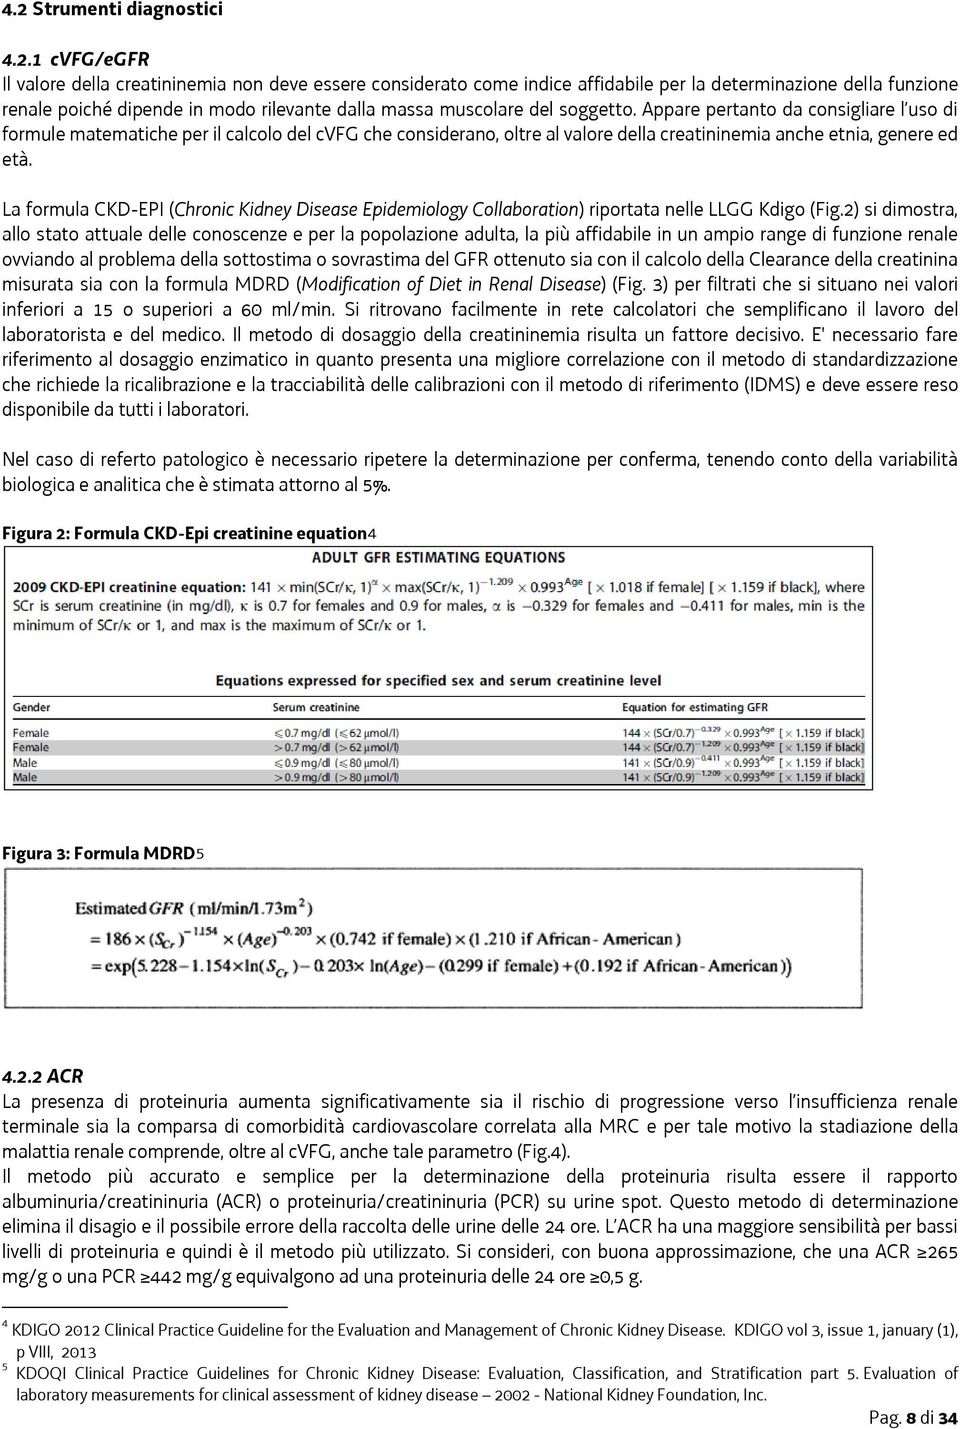 La formula CKD-EPI (Chronic Kidney Disease Epidemiology Collaboration) riportata nelle LLGG Kdigo (Fig.